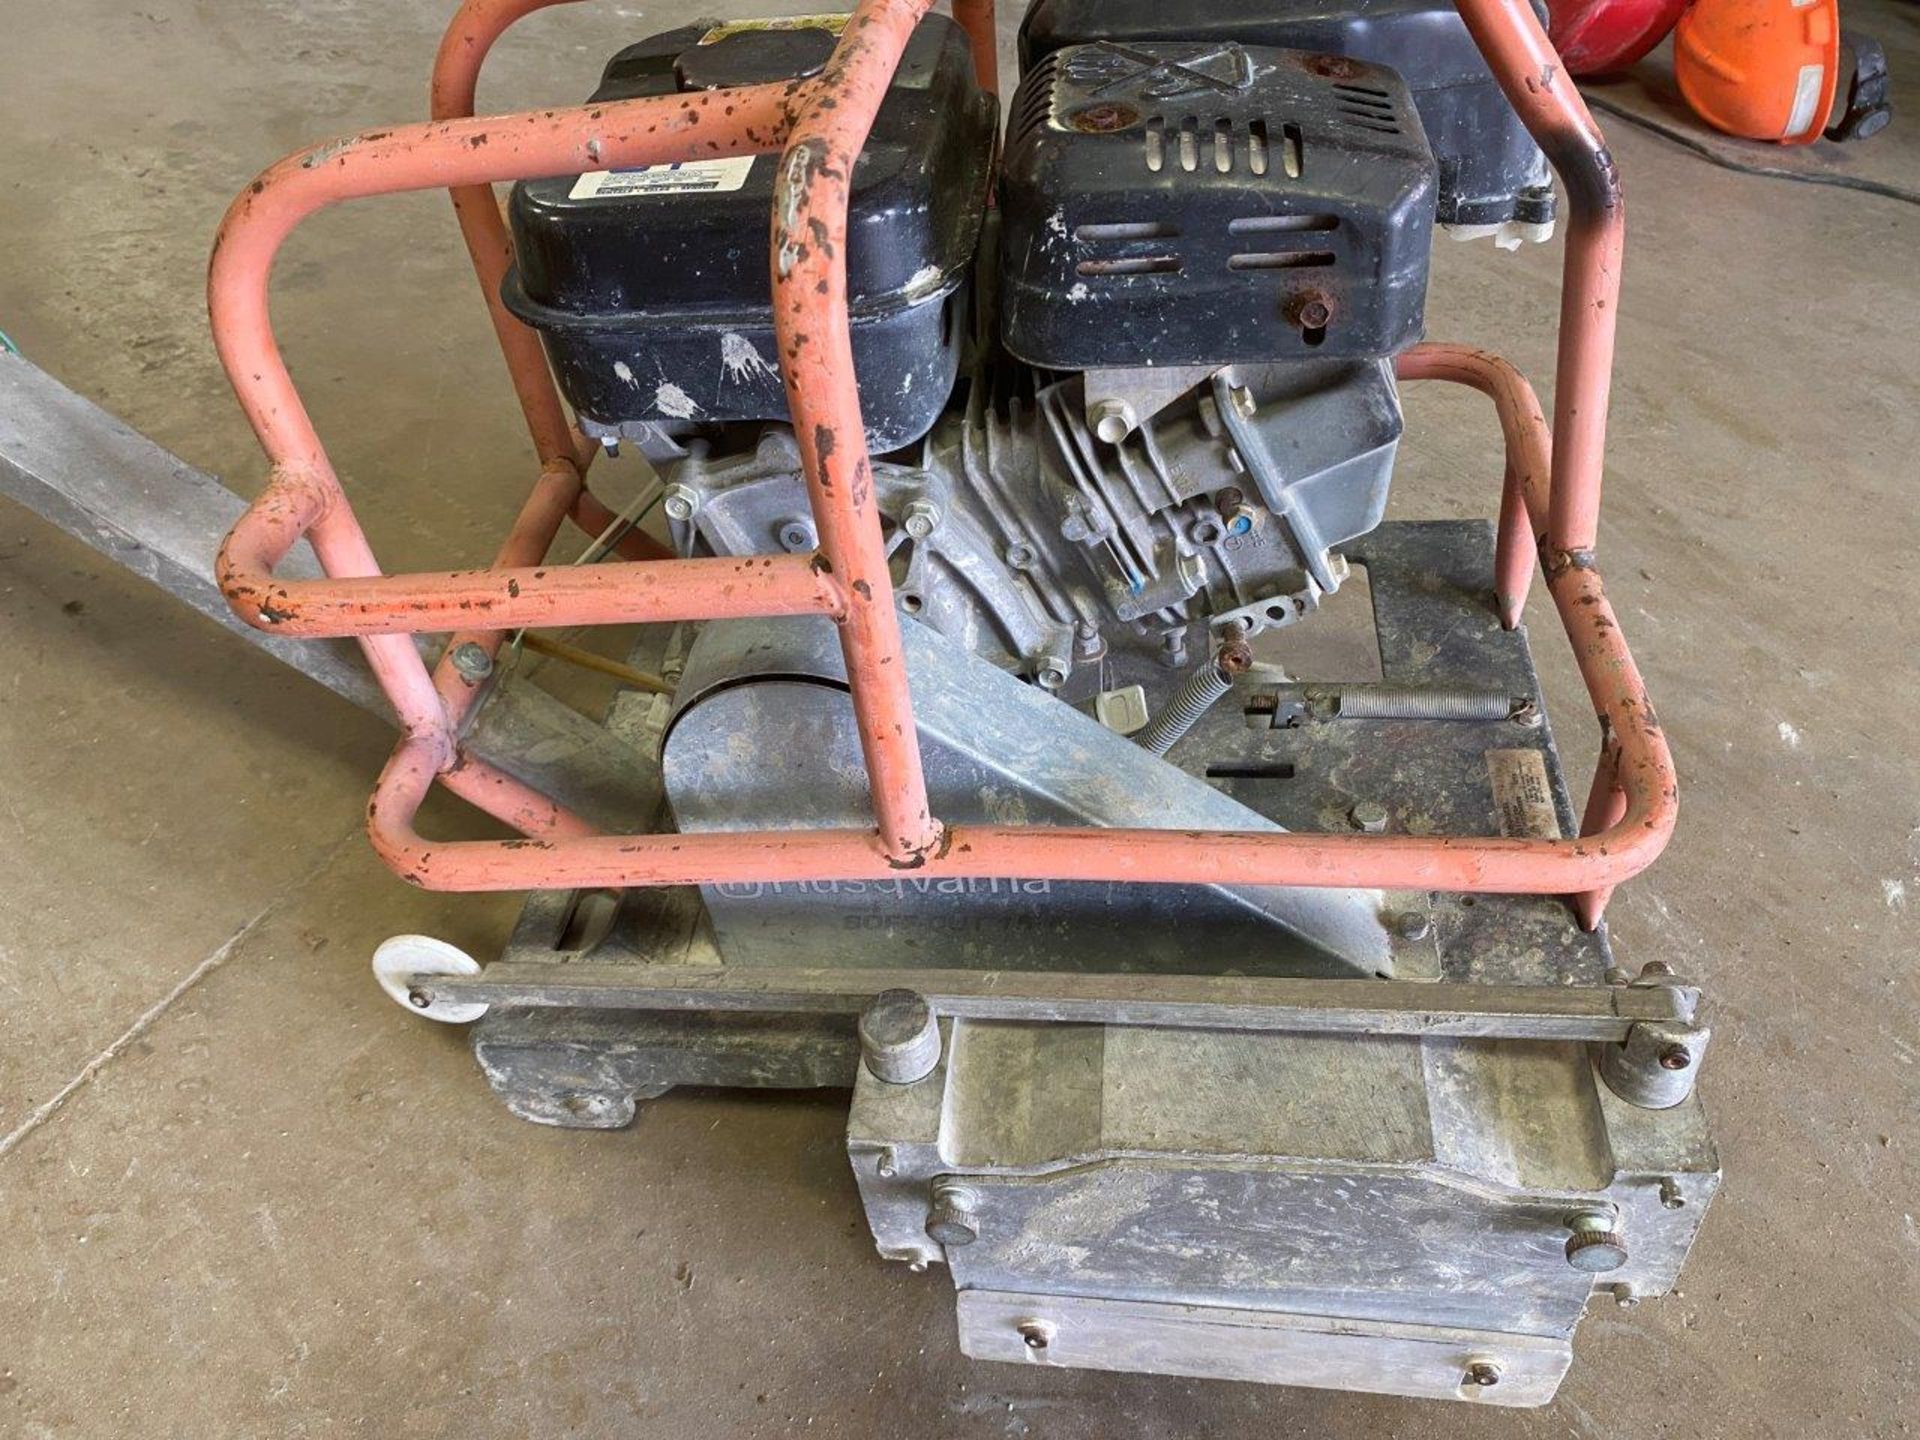 Soff Cut concrete saw, model x150, SN GO 1-282-811-900 Honda gas powered engine, manual start, - Image 5 of 6